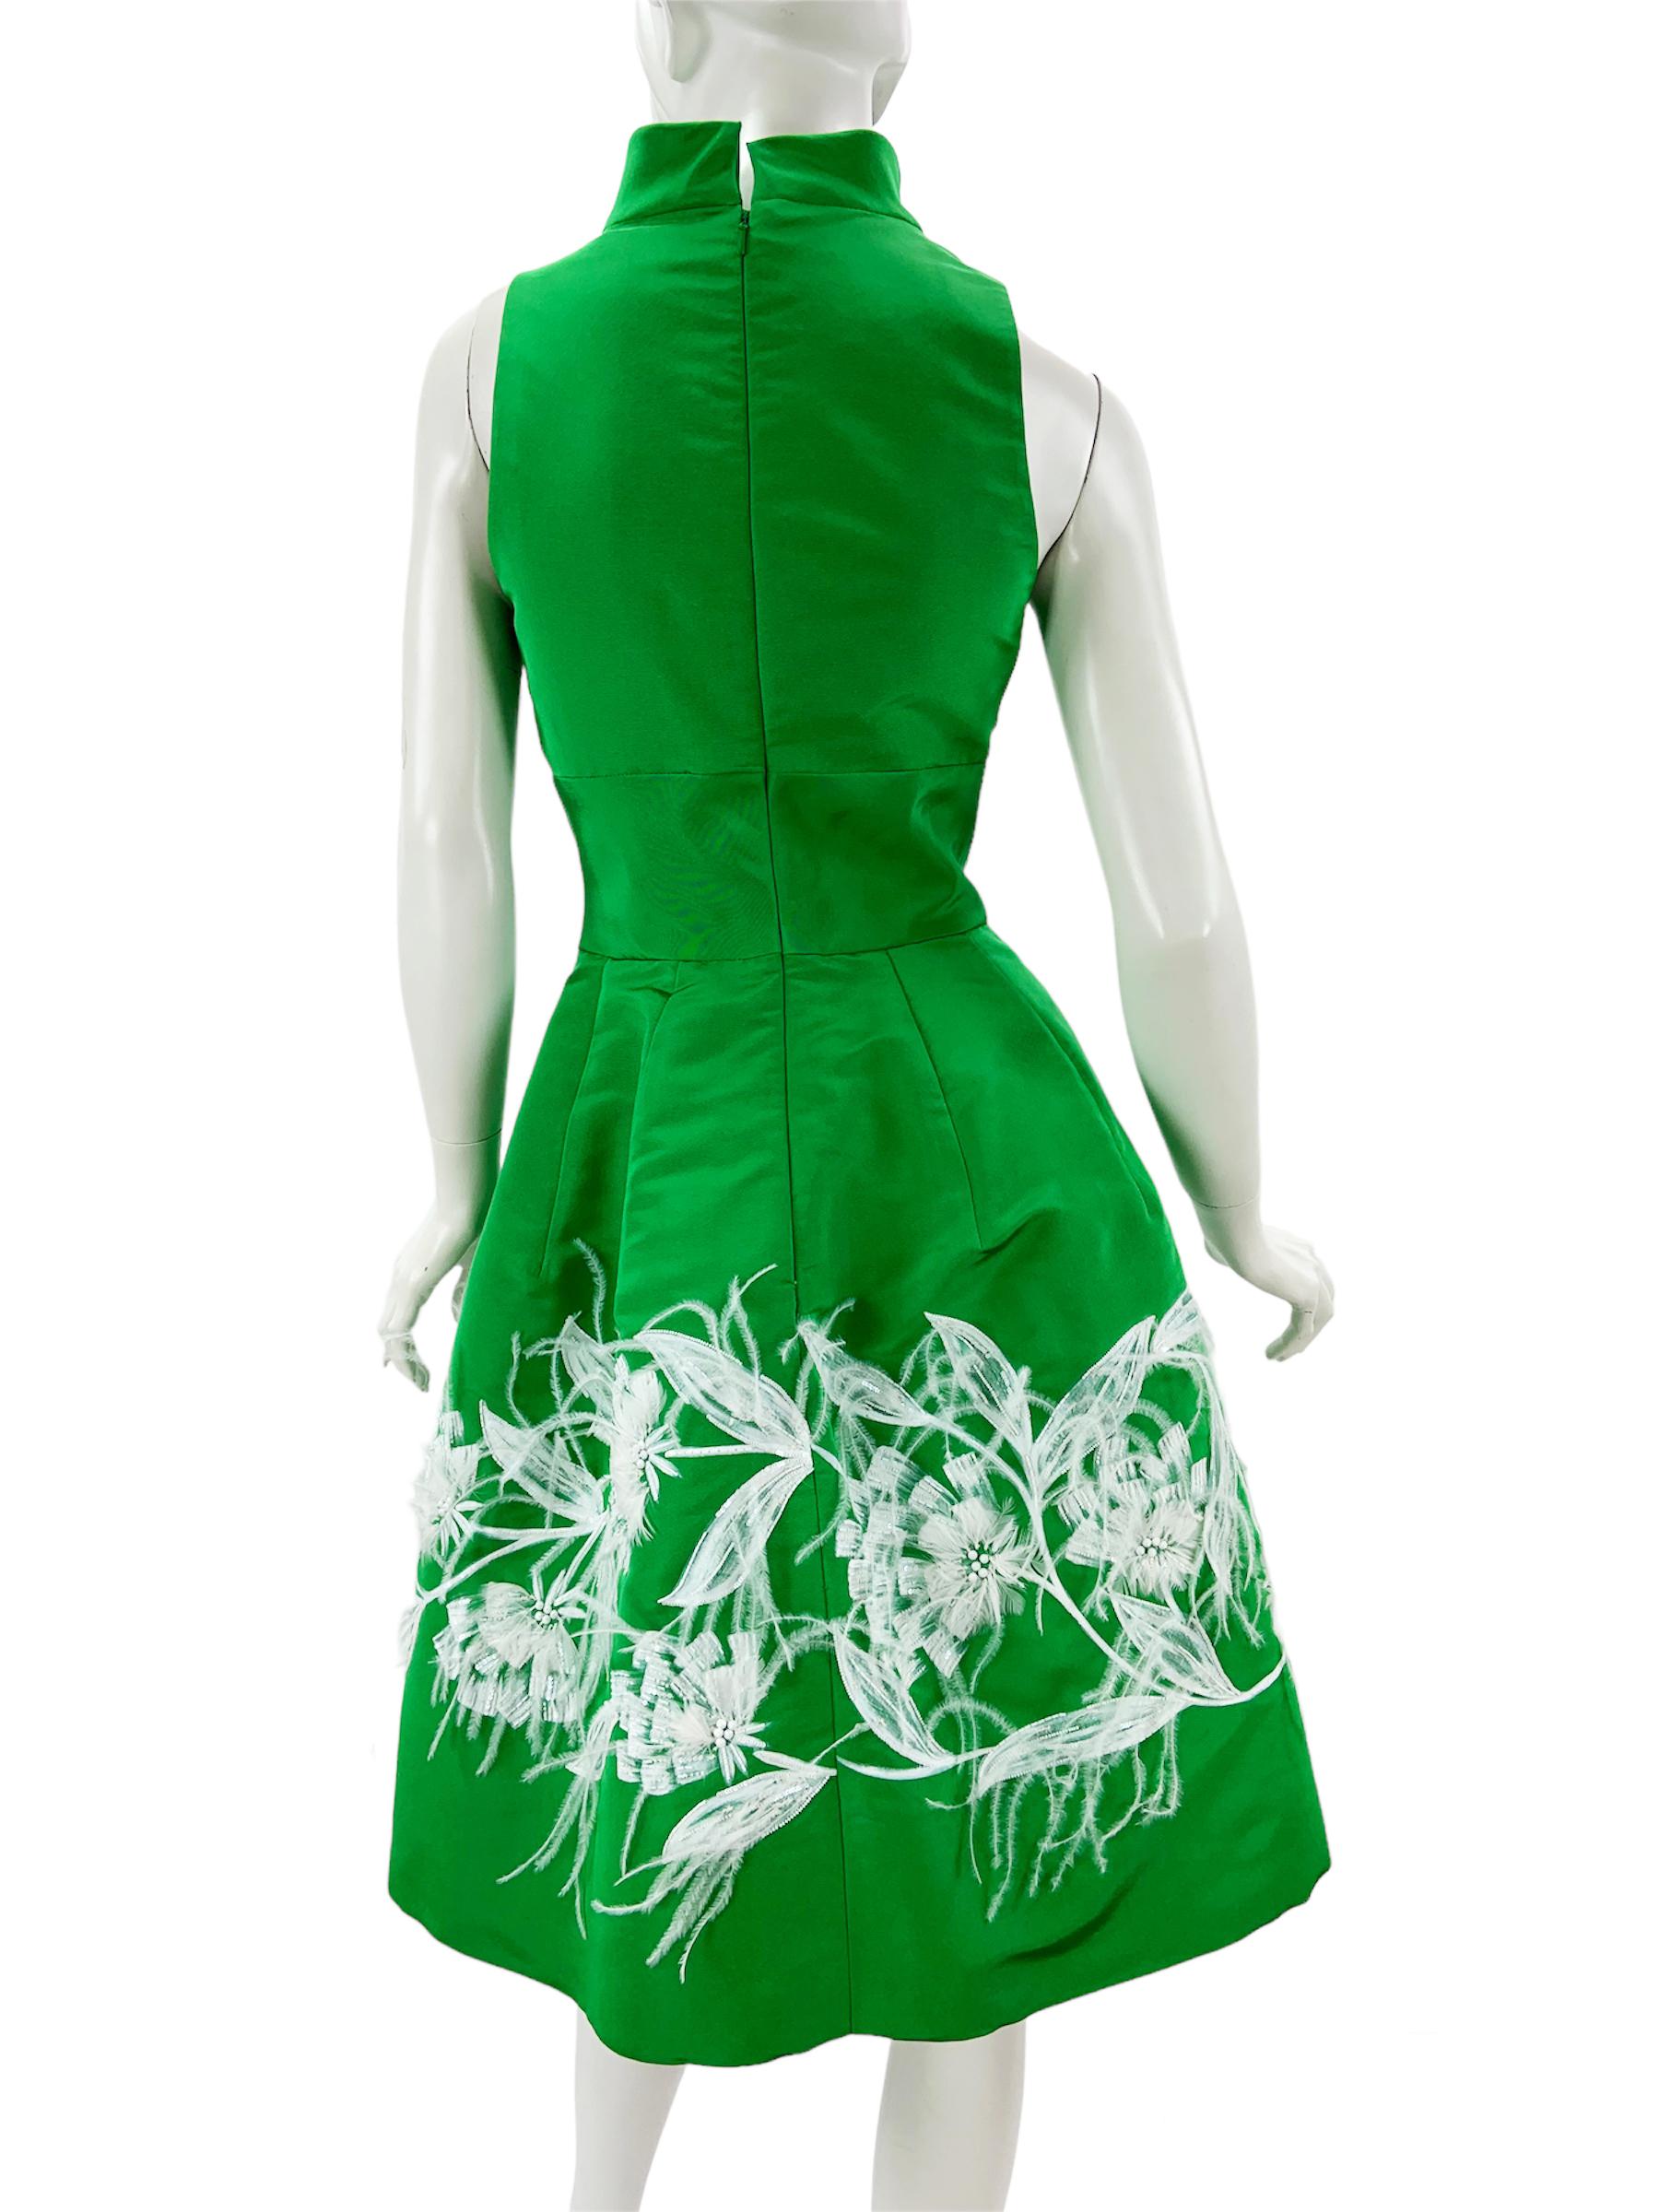 Vert NWT Oscar de la Renta $5490 S/S 2015 Green Silk Taffeta Feather Beads Dress US 6 en vente